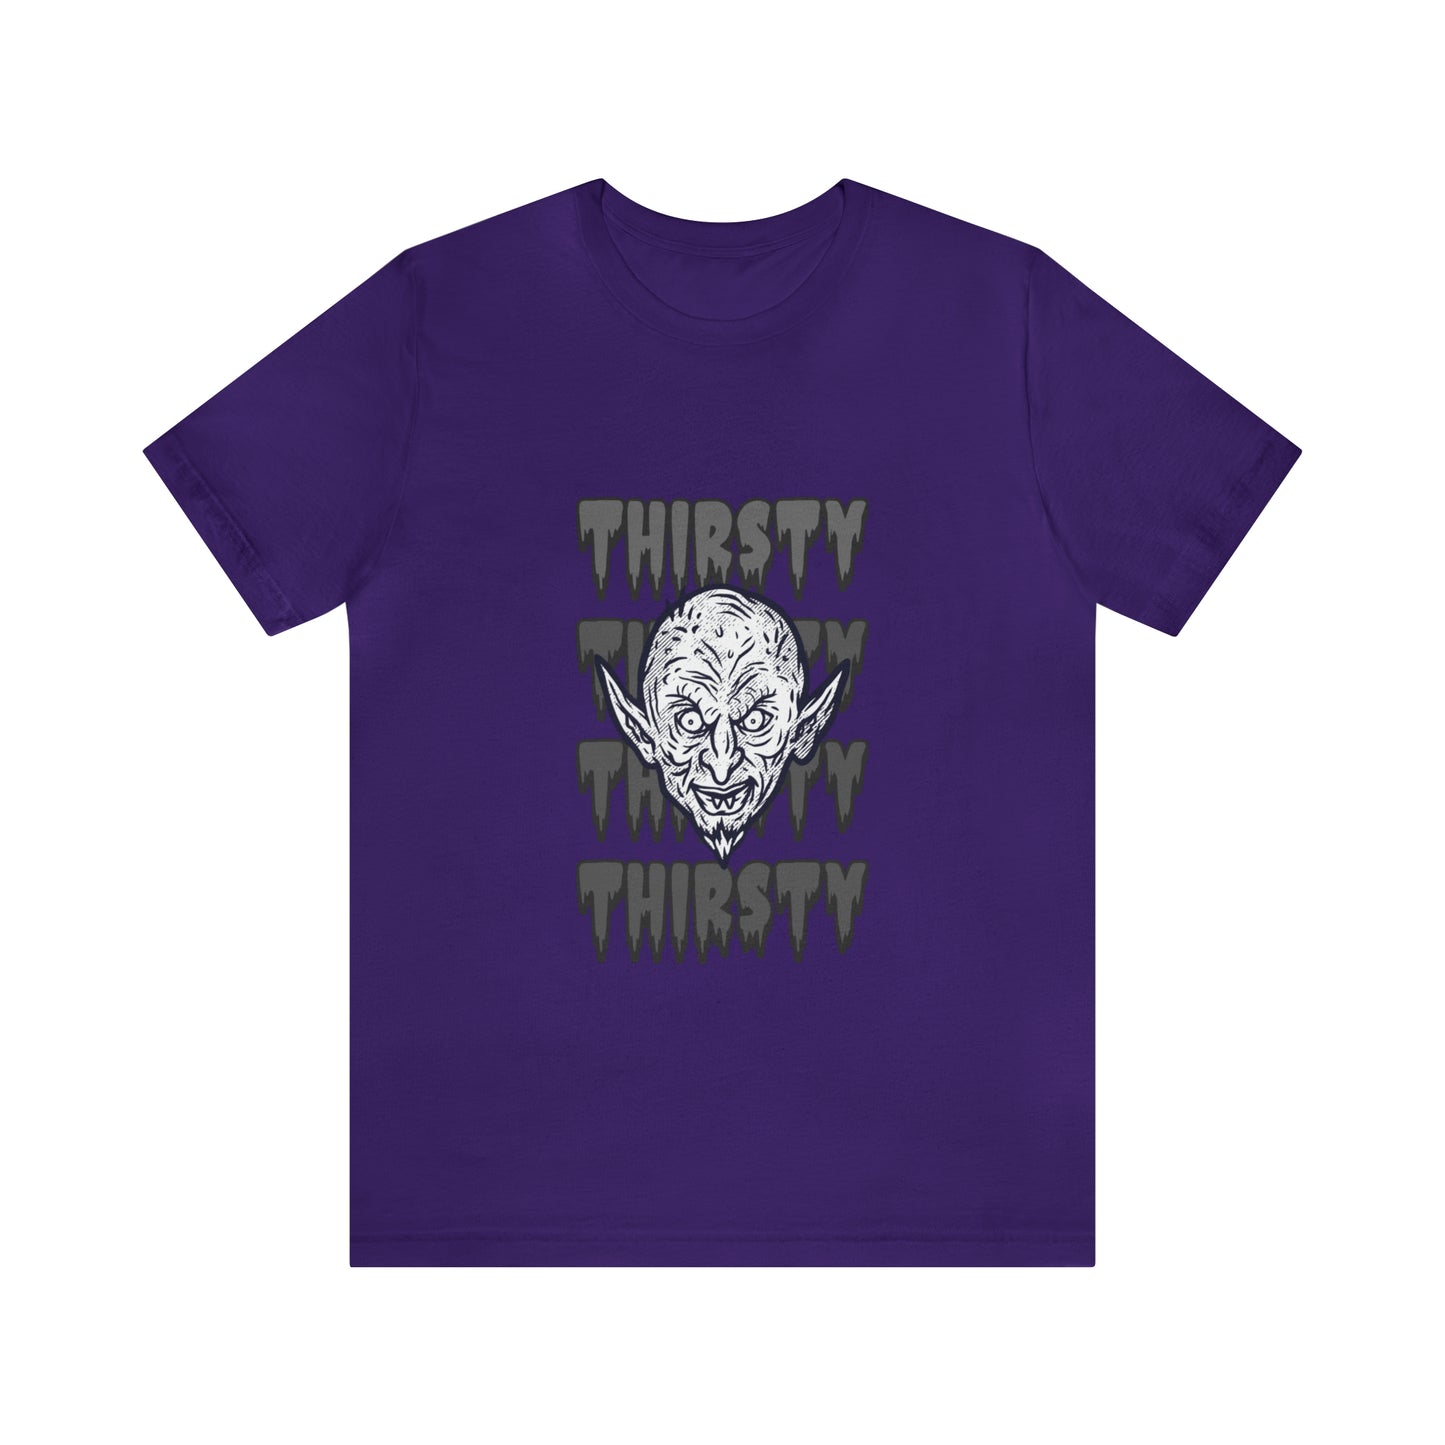 Thirsty - Unisex T-Shirt